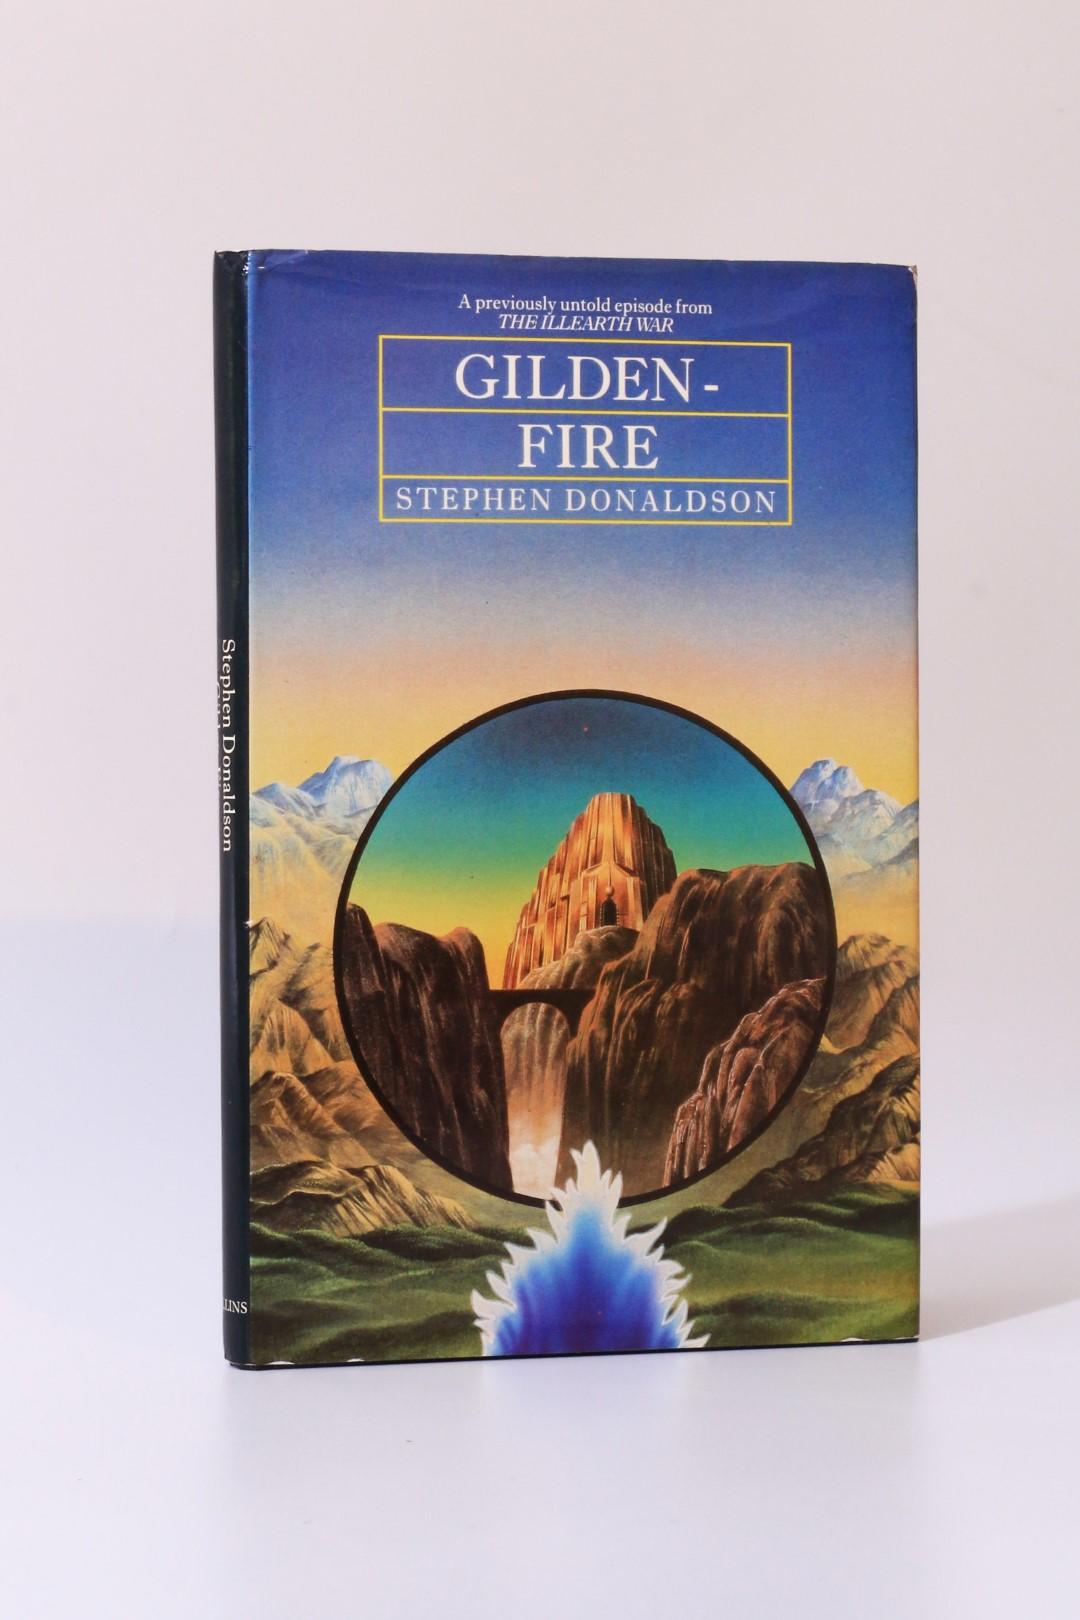 Stephen Donaldson - Gilden-Fire - Collins, 1983, First Edition.